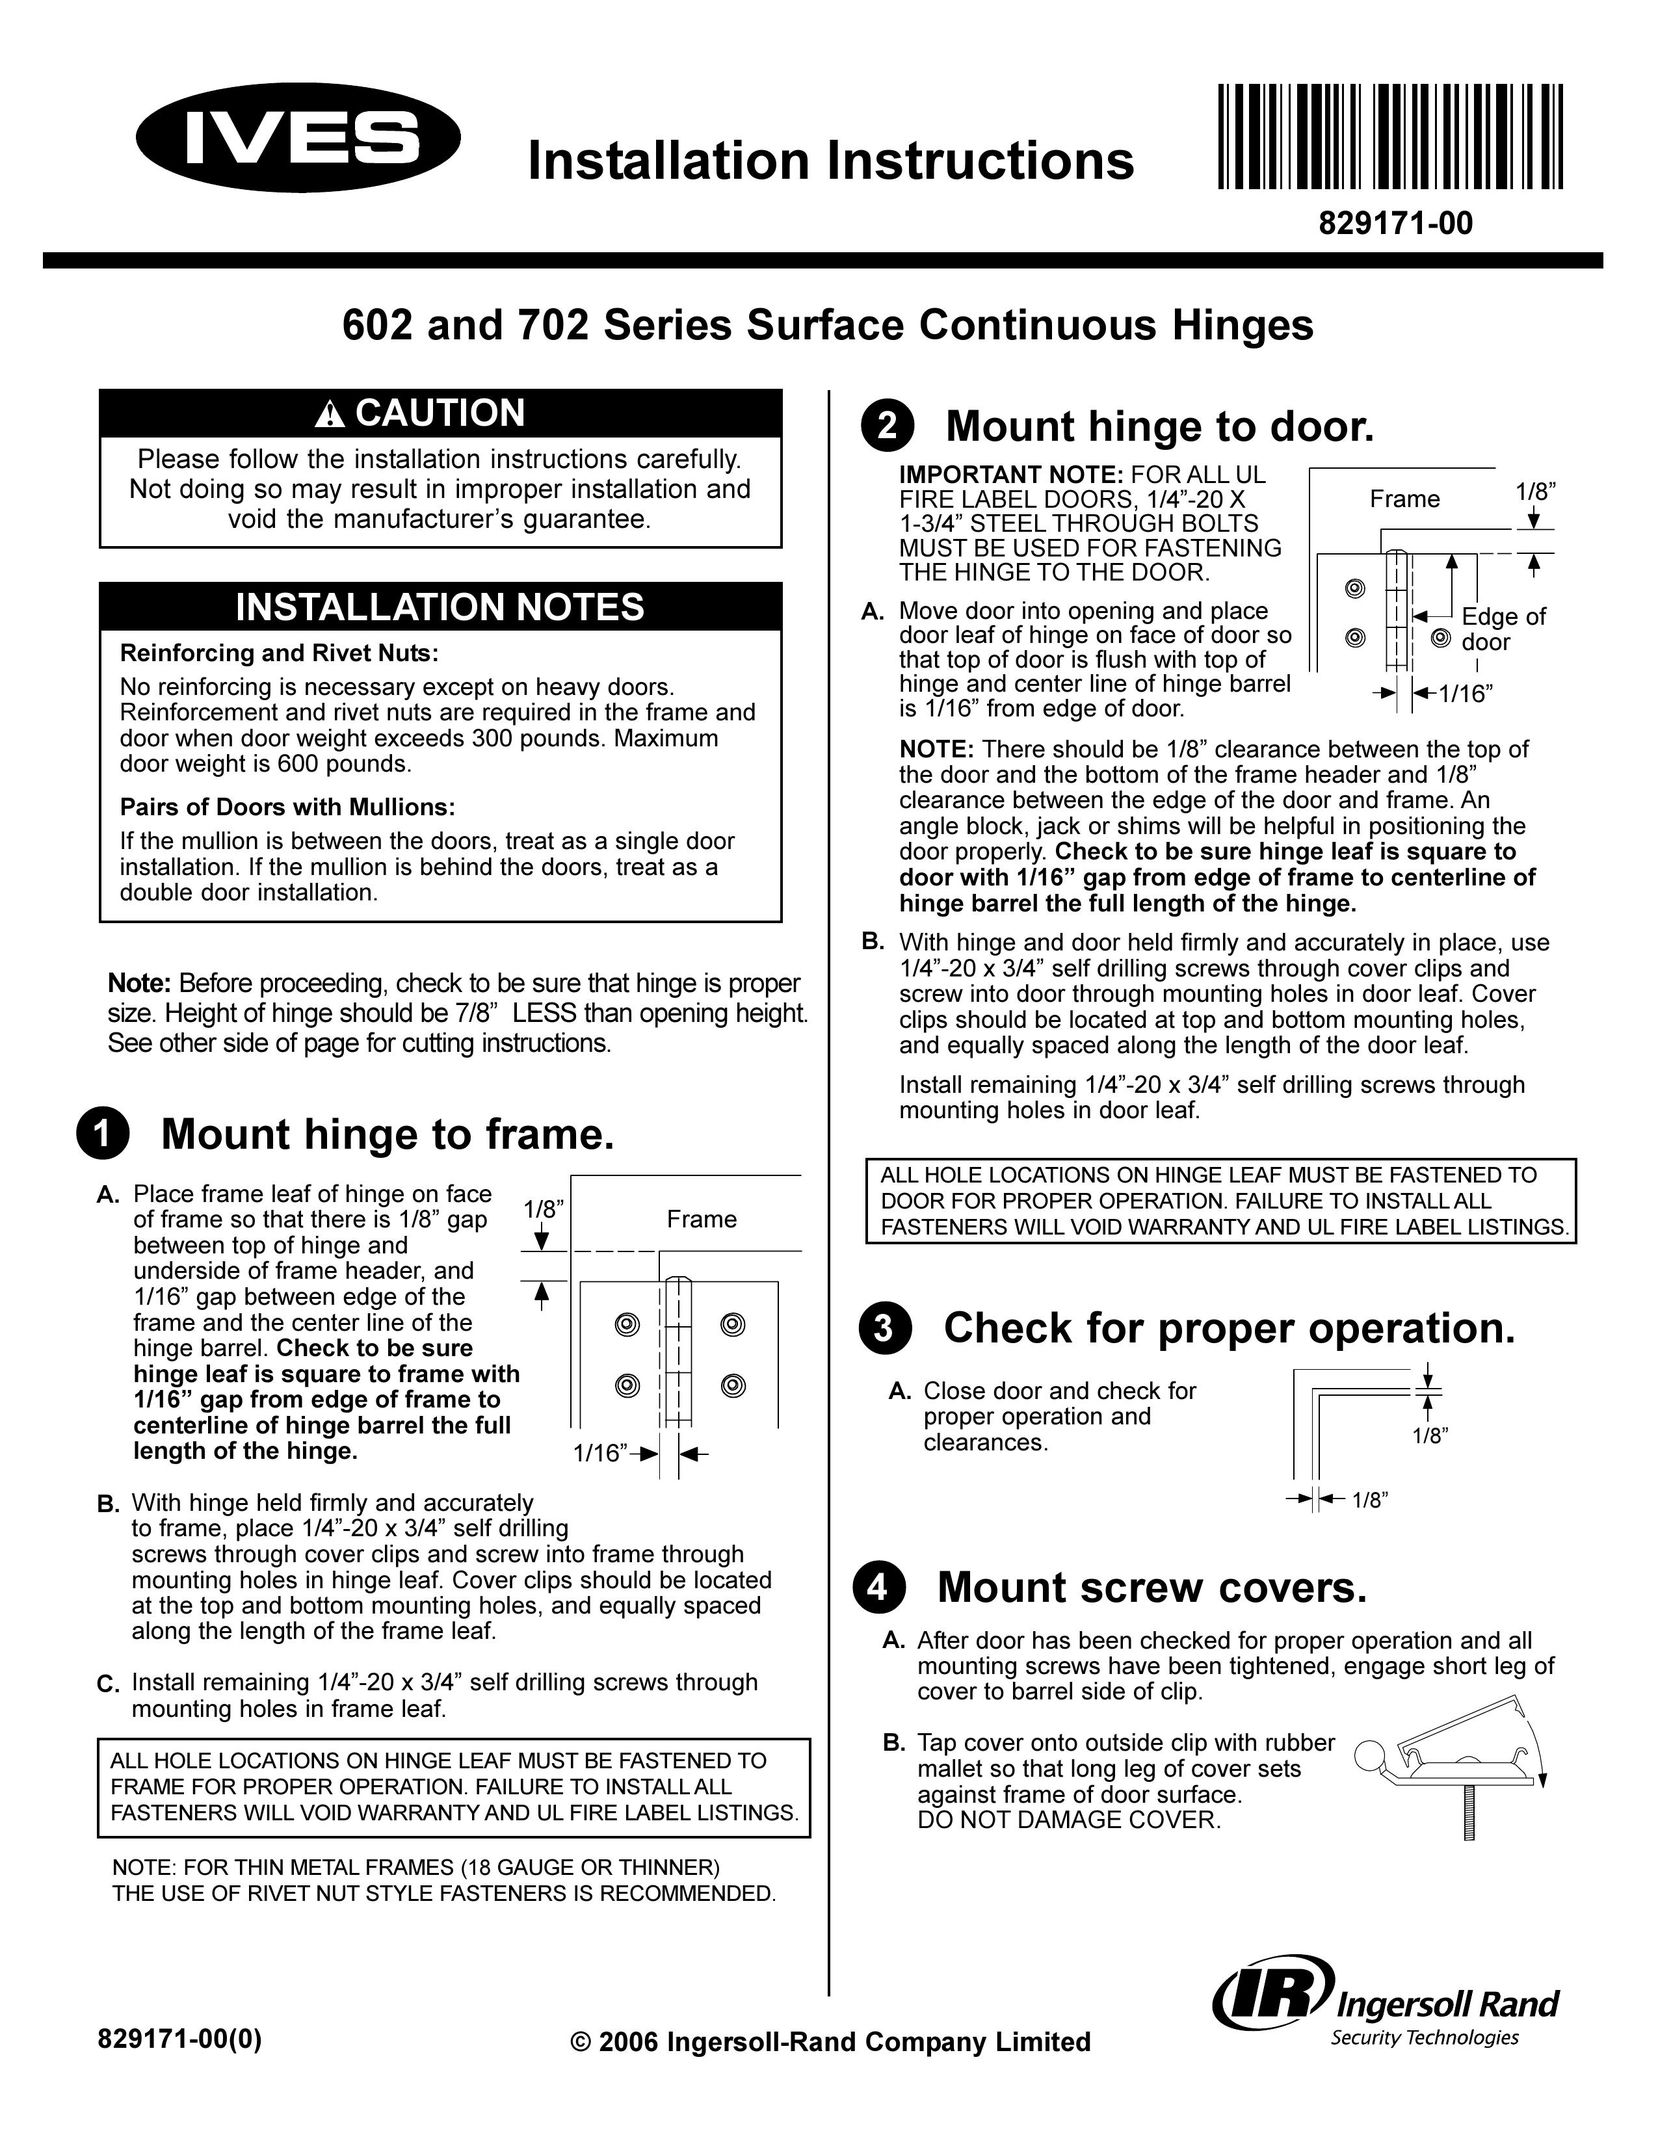 Ives 702 Series Door User Manual